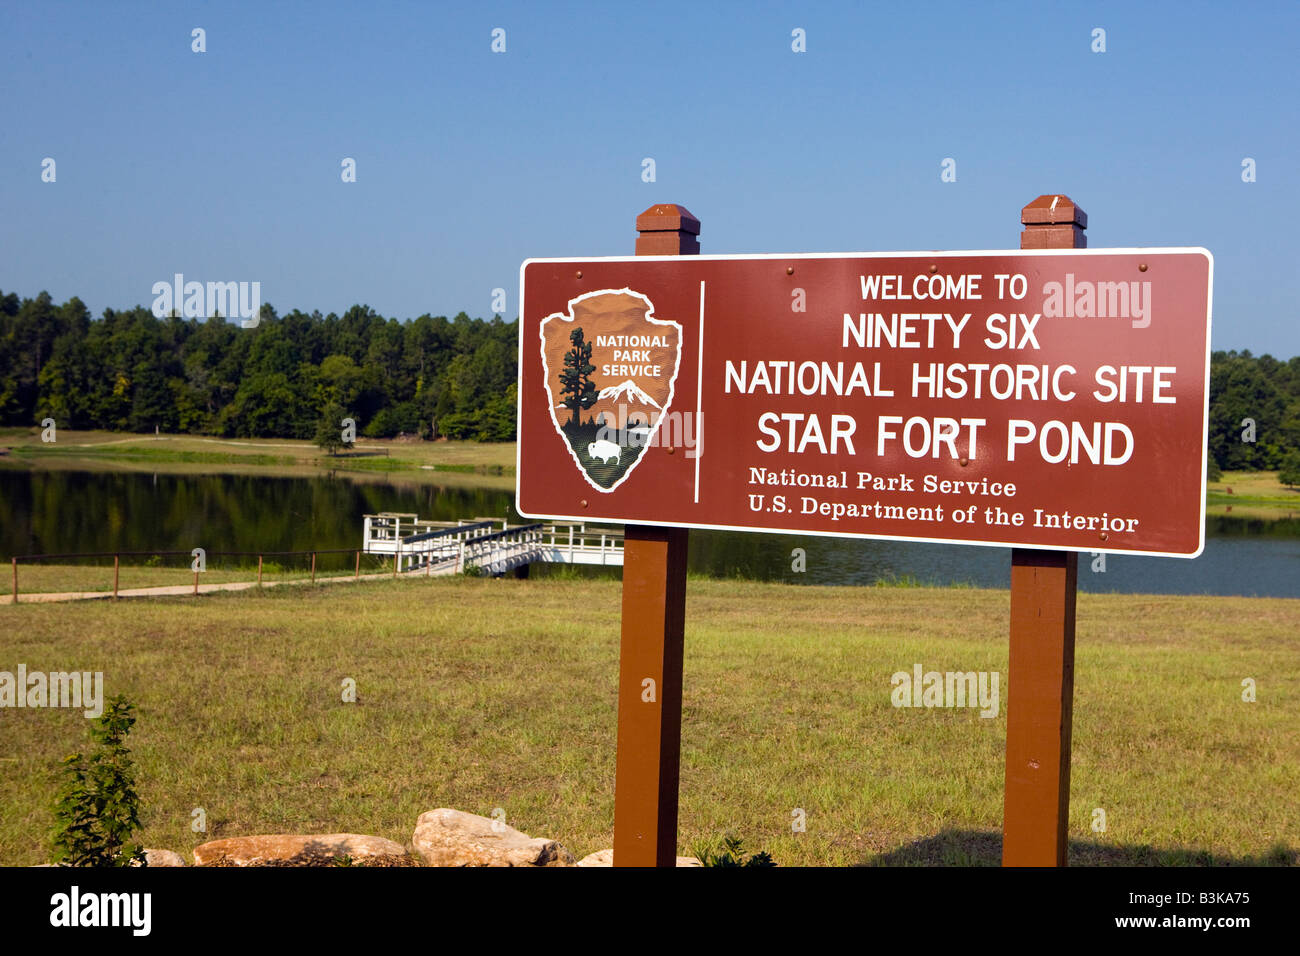 National Park Service willkommen Zeichen der Sterne Fort Teich, neunzig sechs National Historic Site, Ninety - Six, South Carolina. Stockfoto